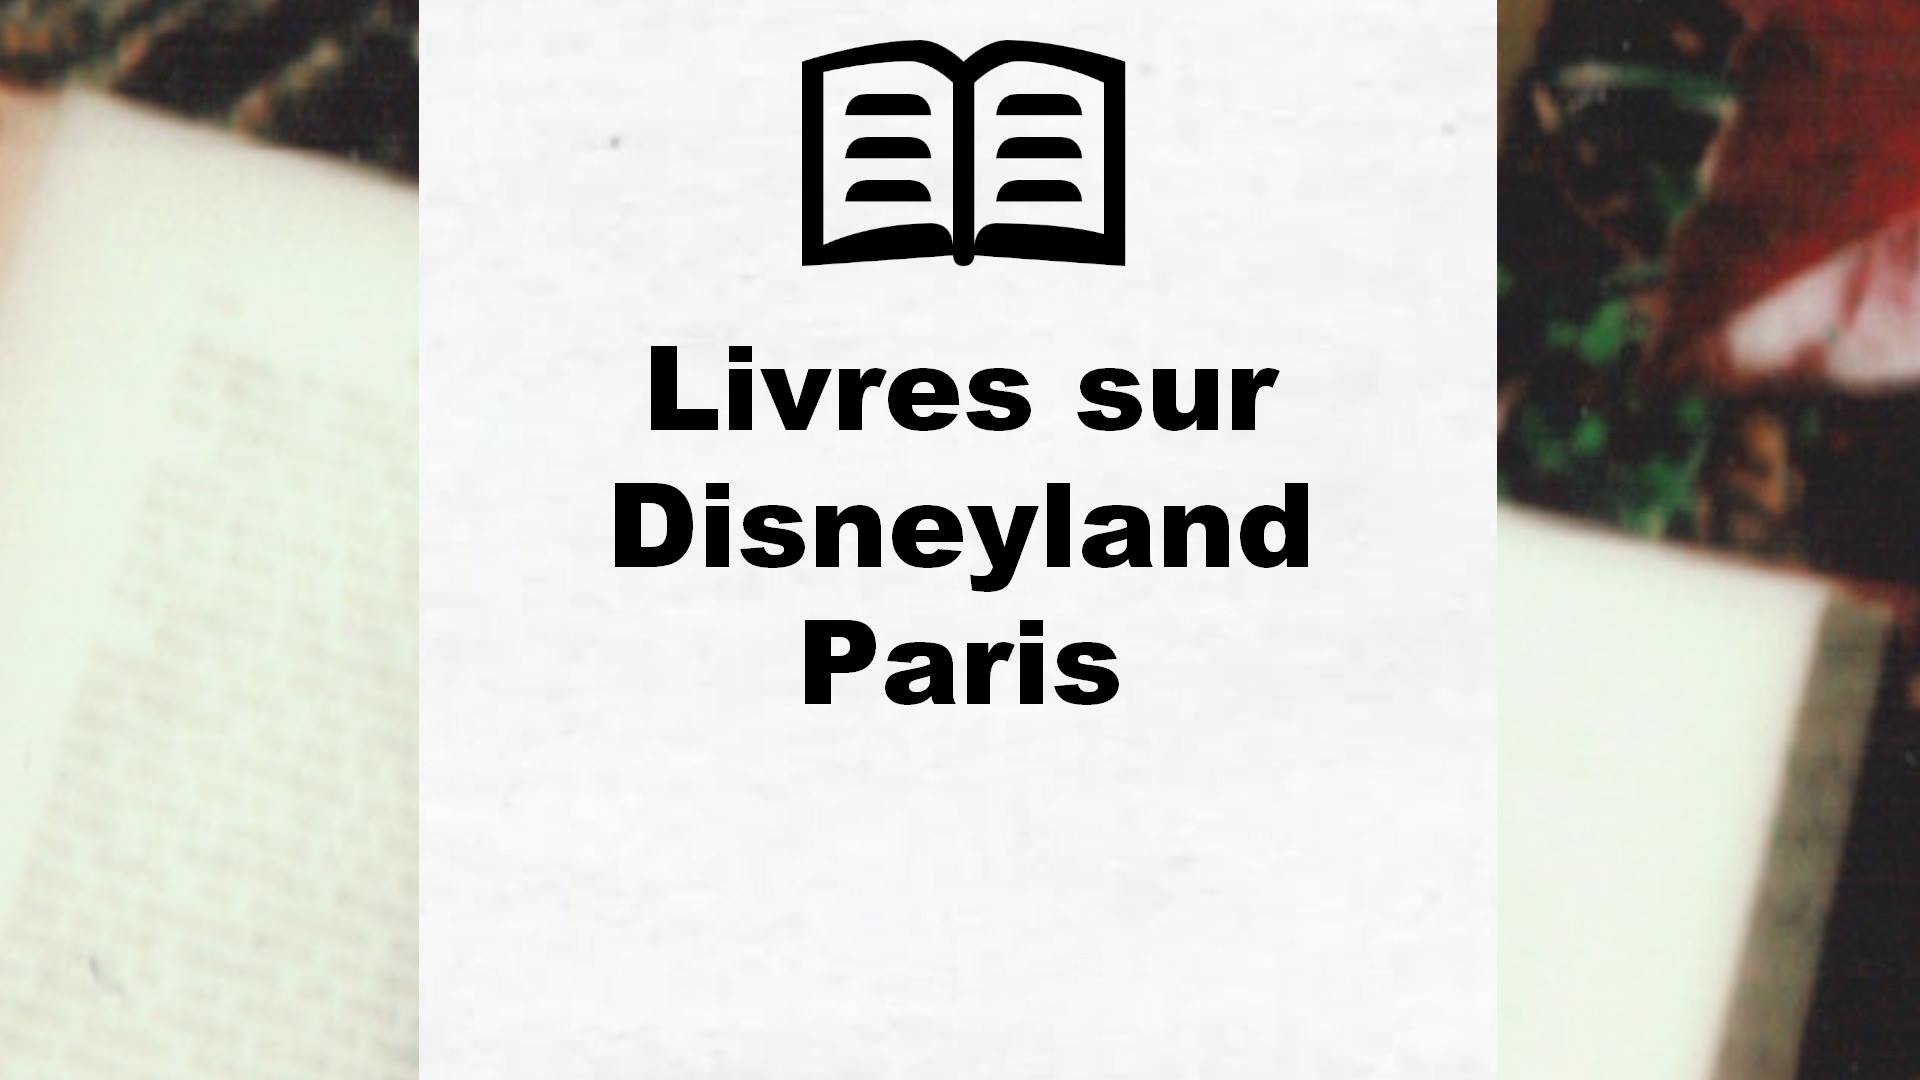 Livres sur Disneyland Paris